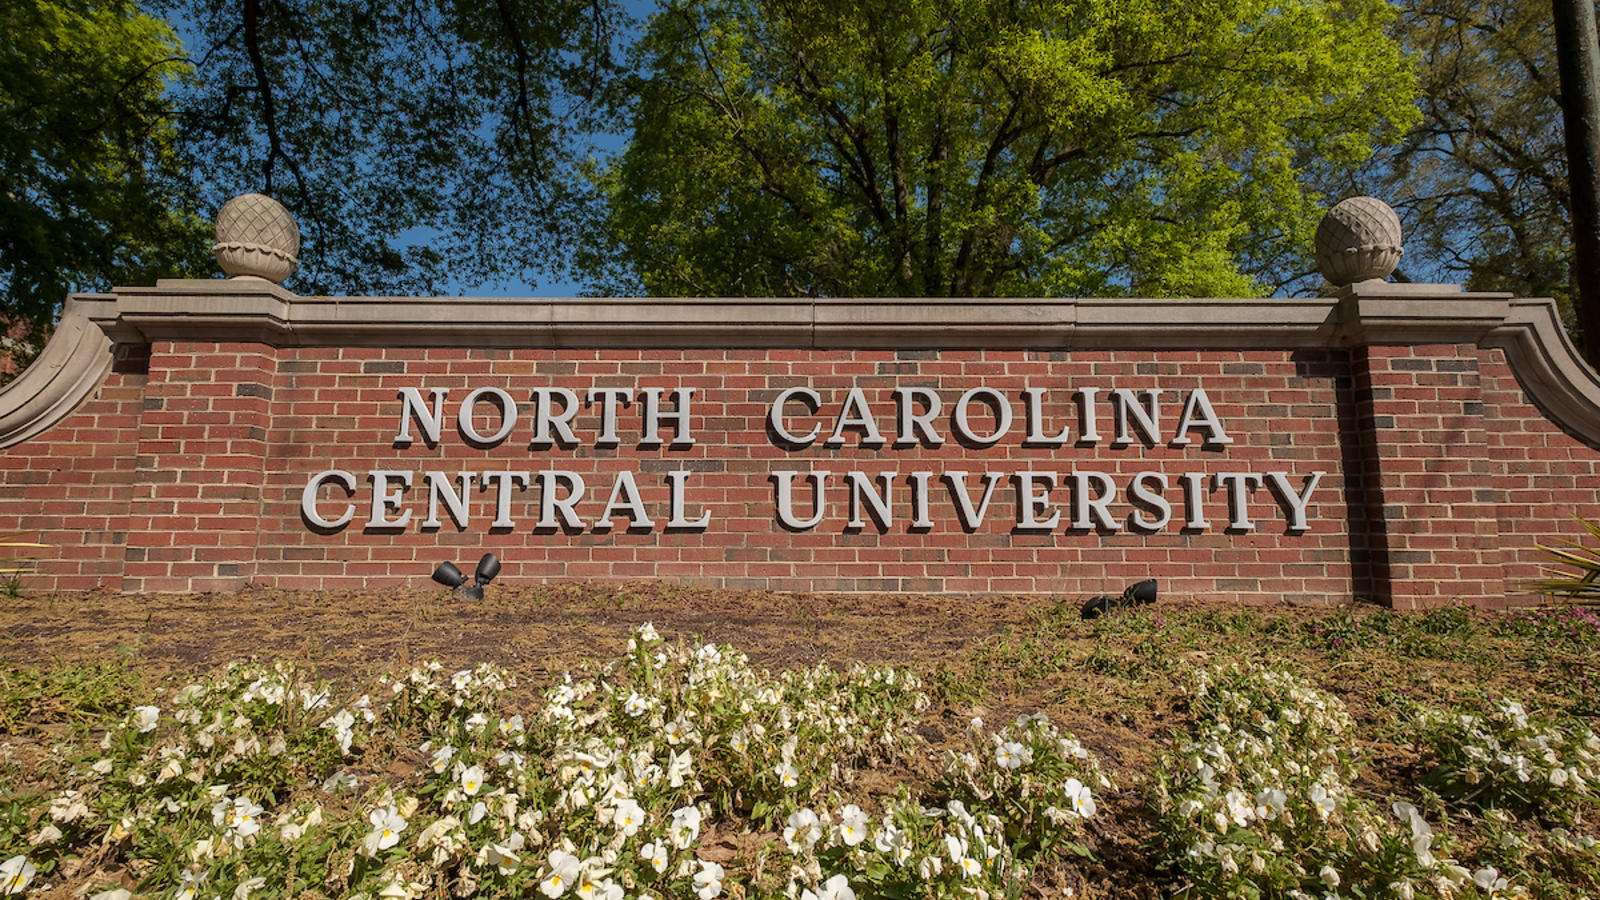 nccu calendar 2021 Message From The Chancellor Nccu S Revised Fall 2020 Academic Calendar North Carolina Central University nccu calendar 2021